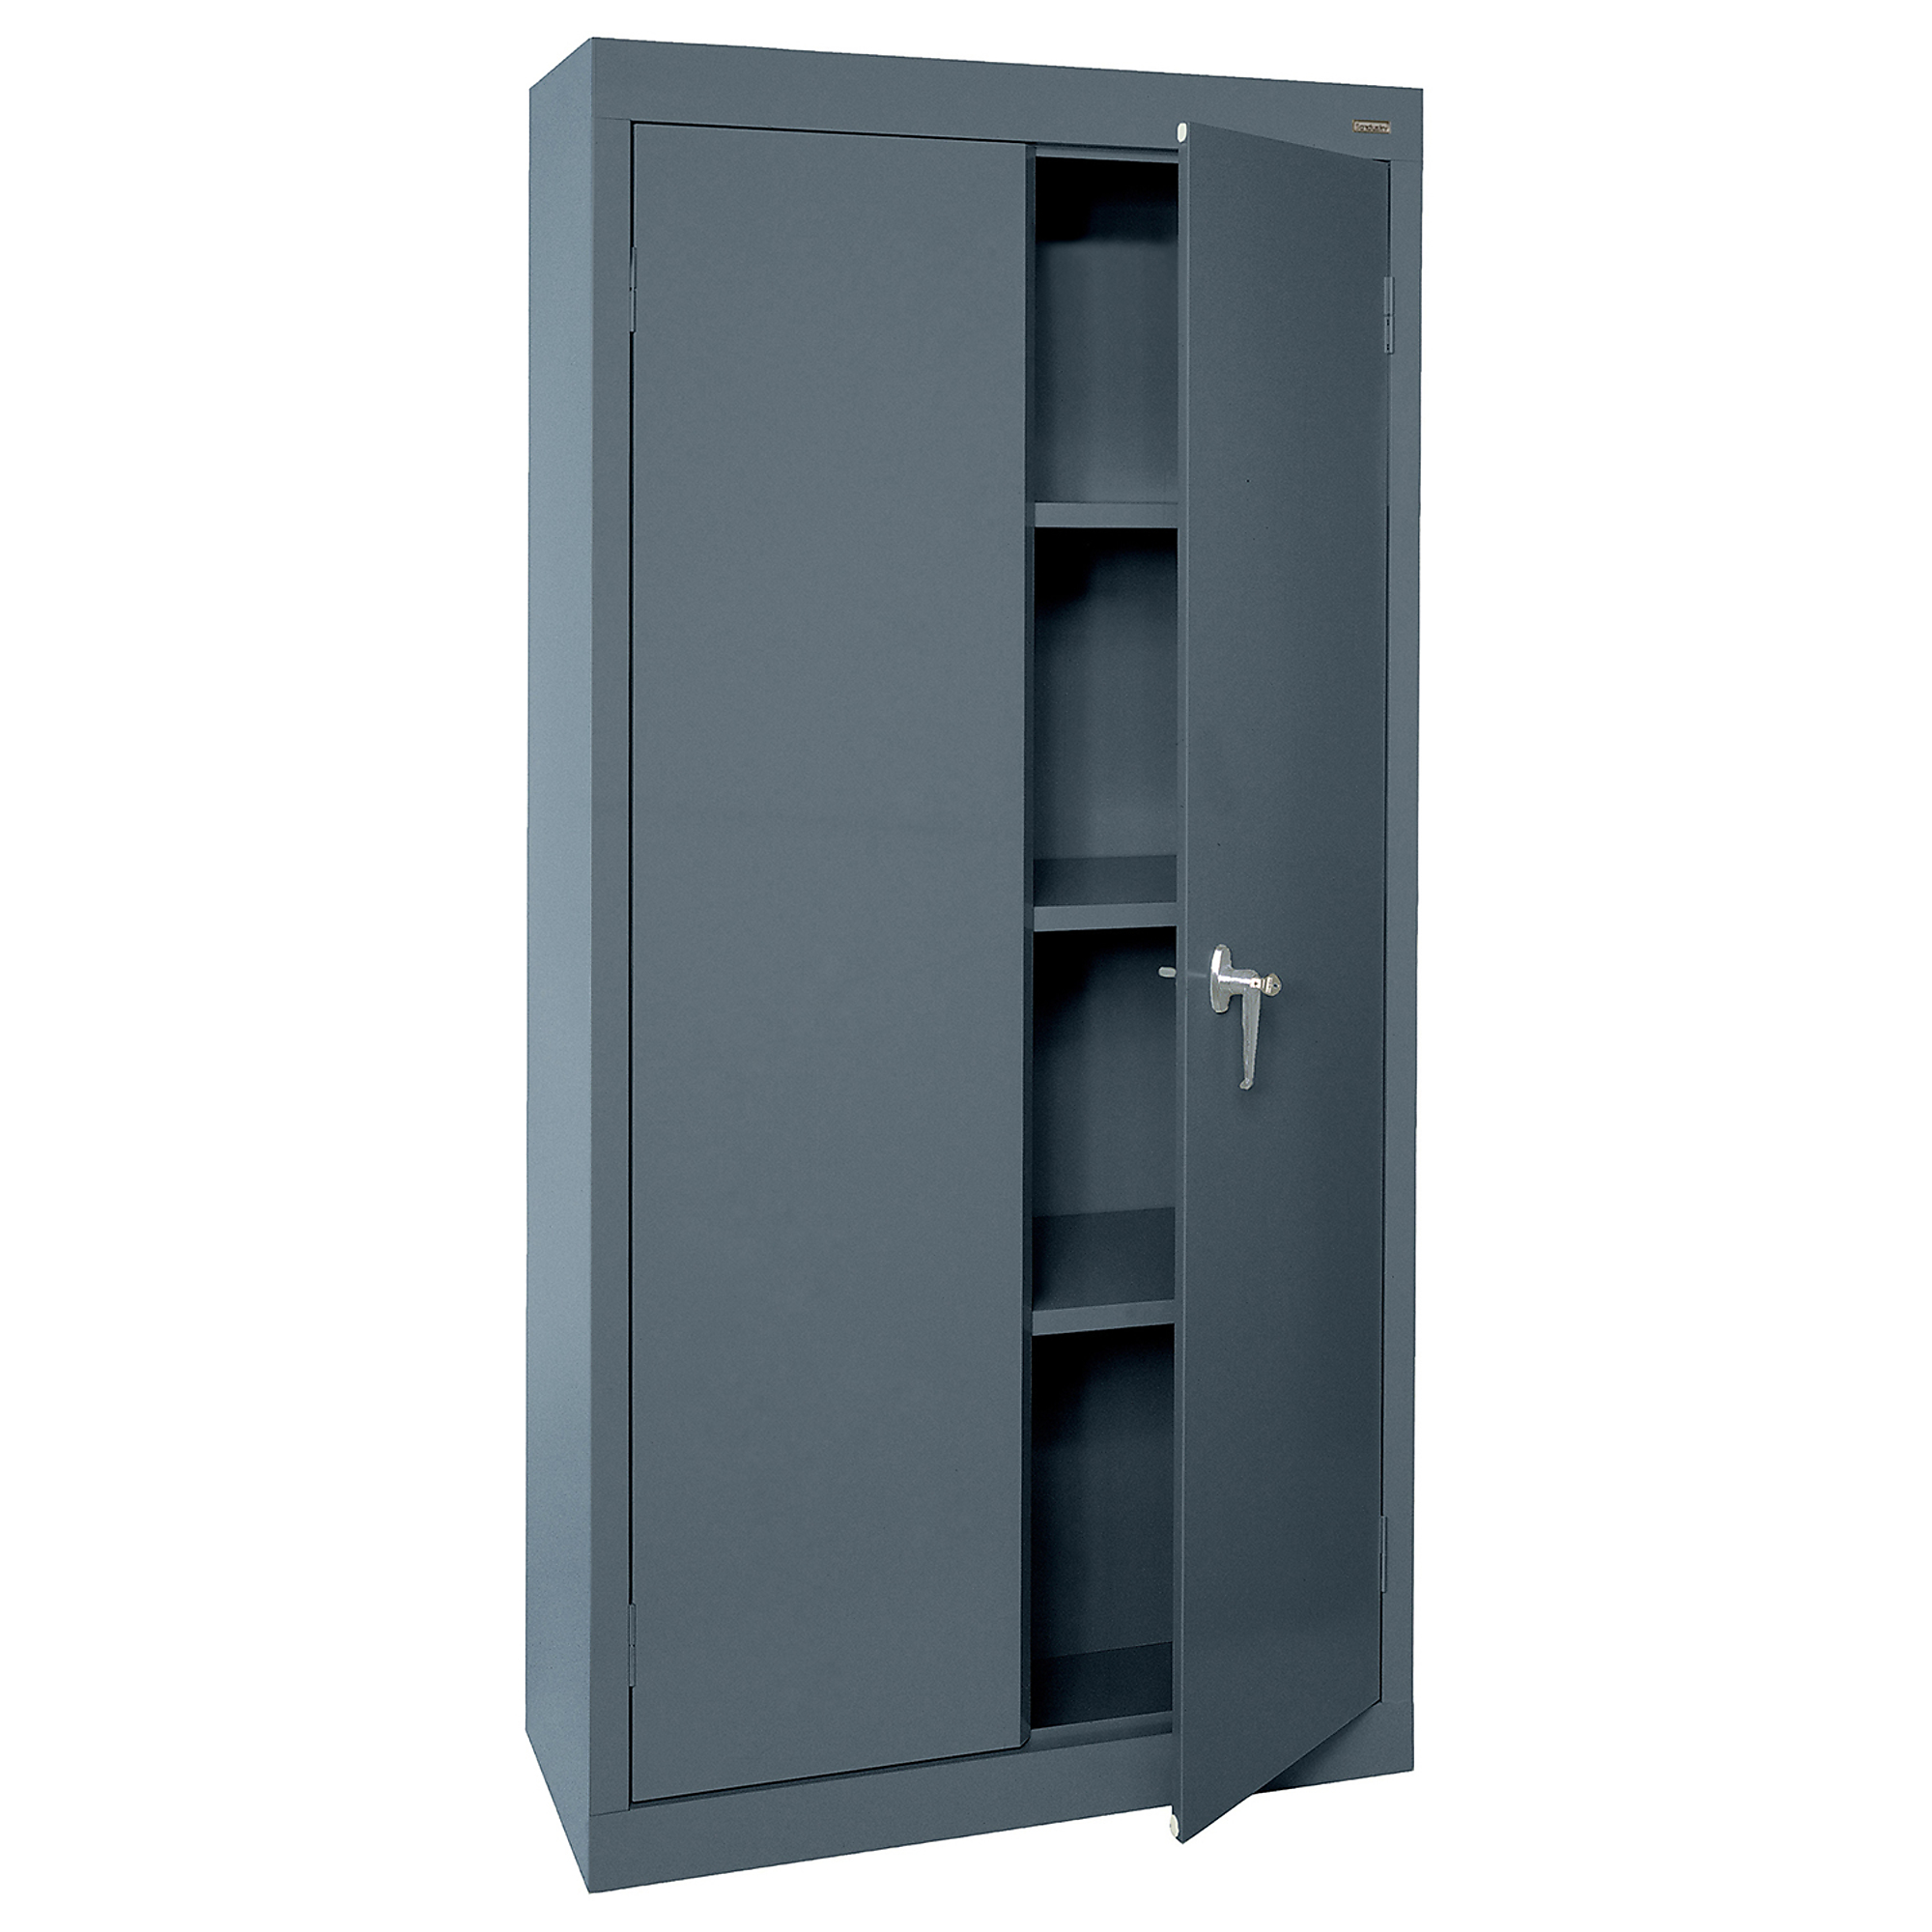 Sandusky Lee Sandusky, Value Line Cabinet 30x18x72 Charcoal, Height 72 in, Width 30 in, Color Charcoal, Model VF31301872-02